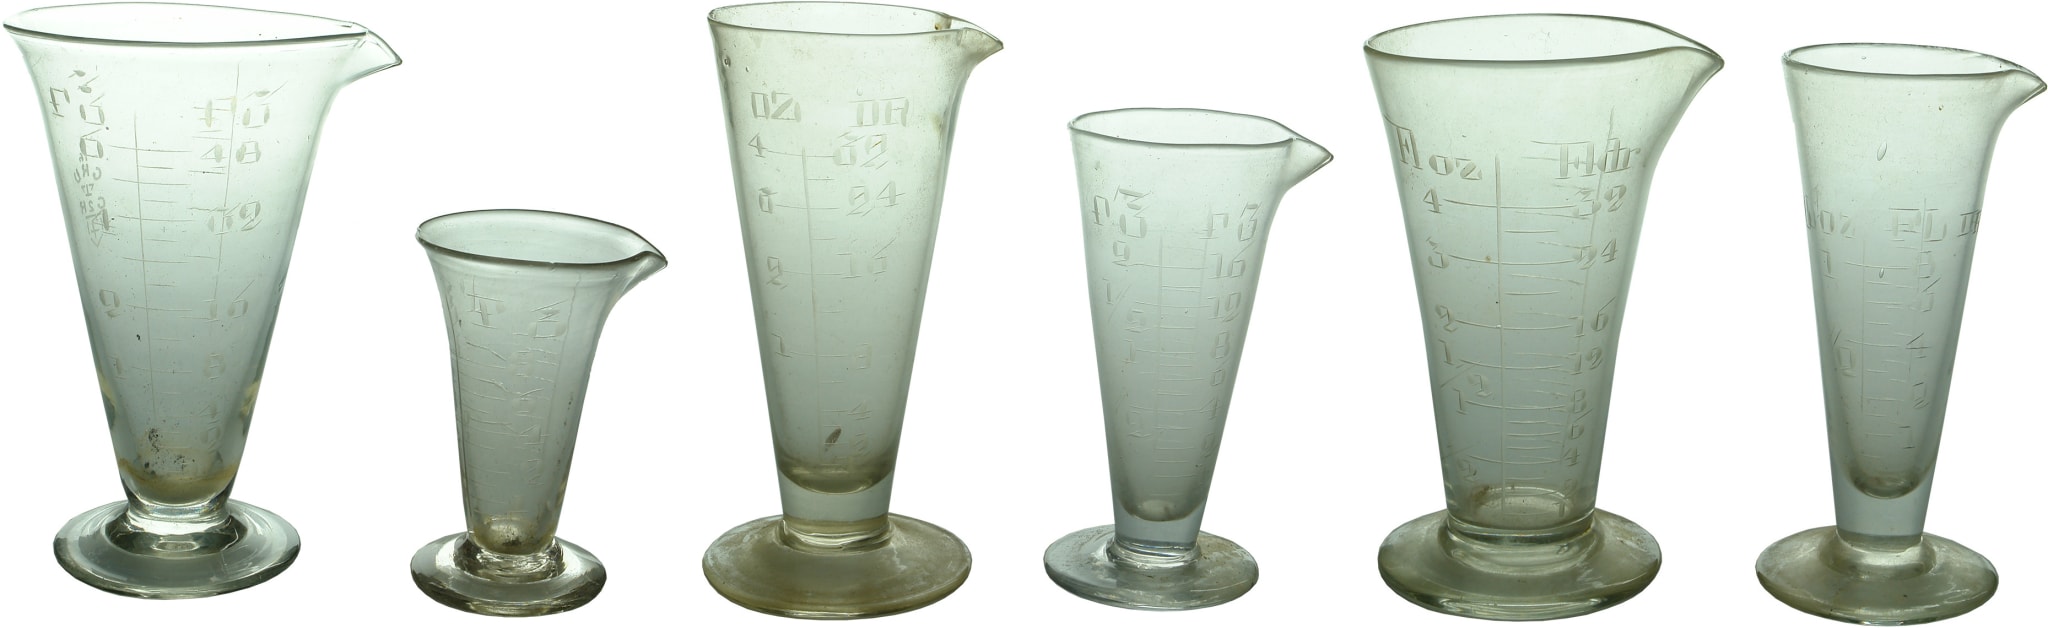 Antique Pharmacy Measuring beakers